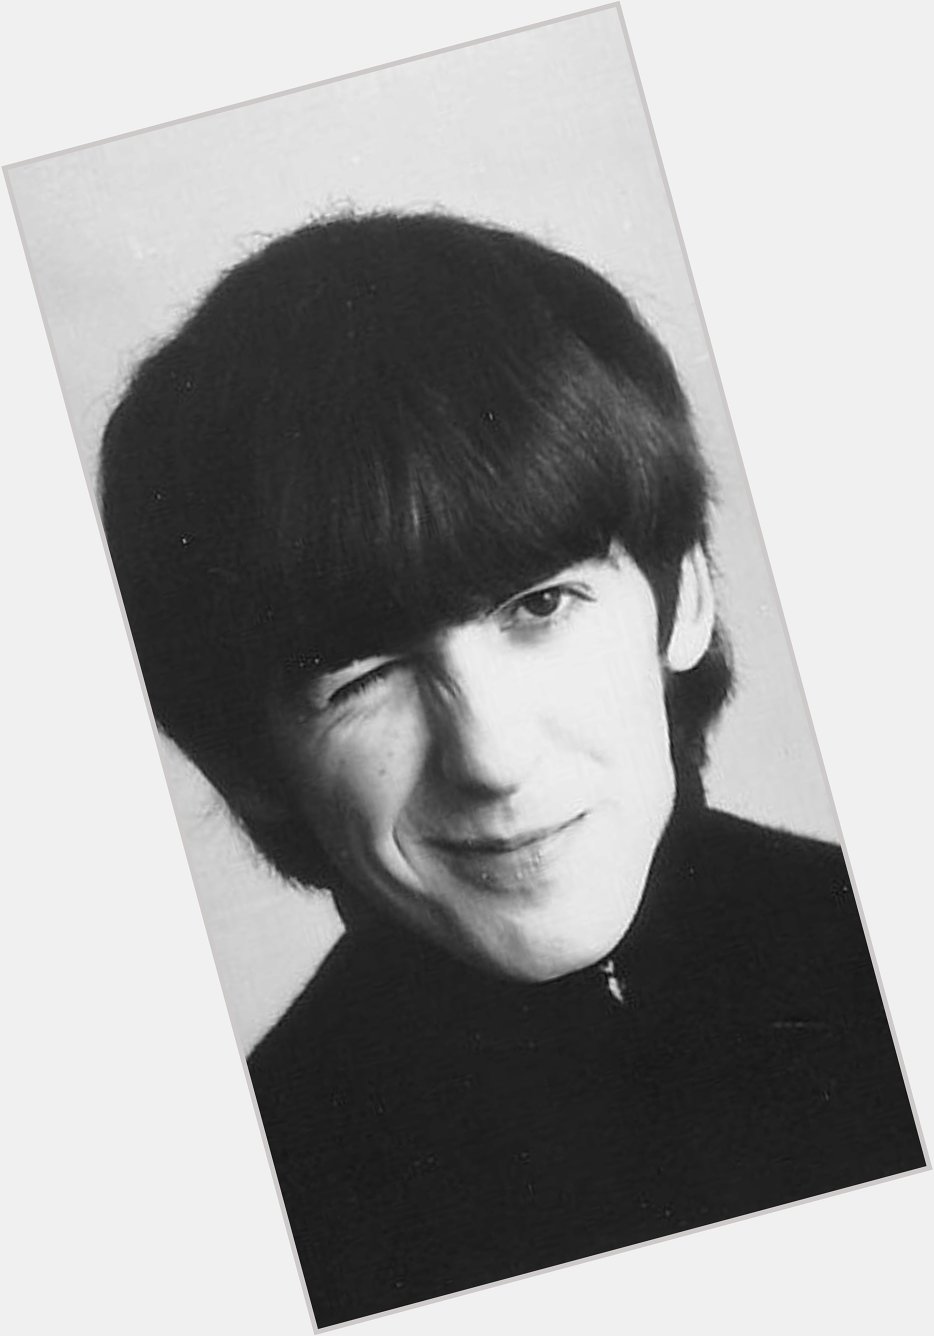 Happy Birthday George Harrison. Much missed. 
My Sweet Lord  